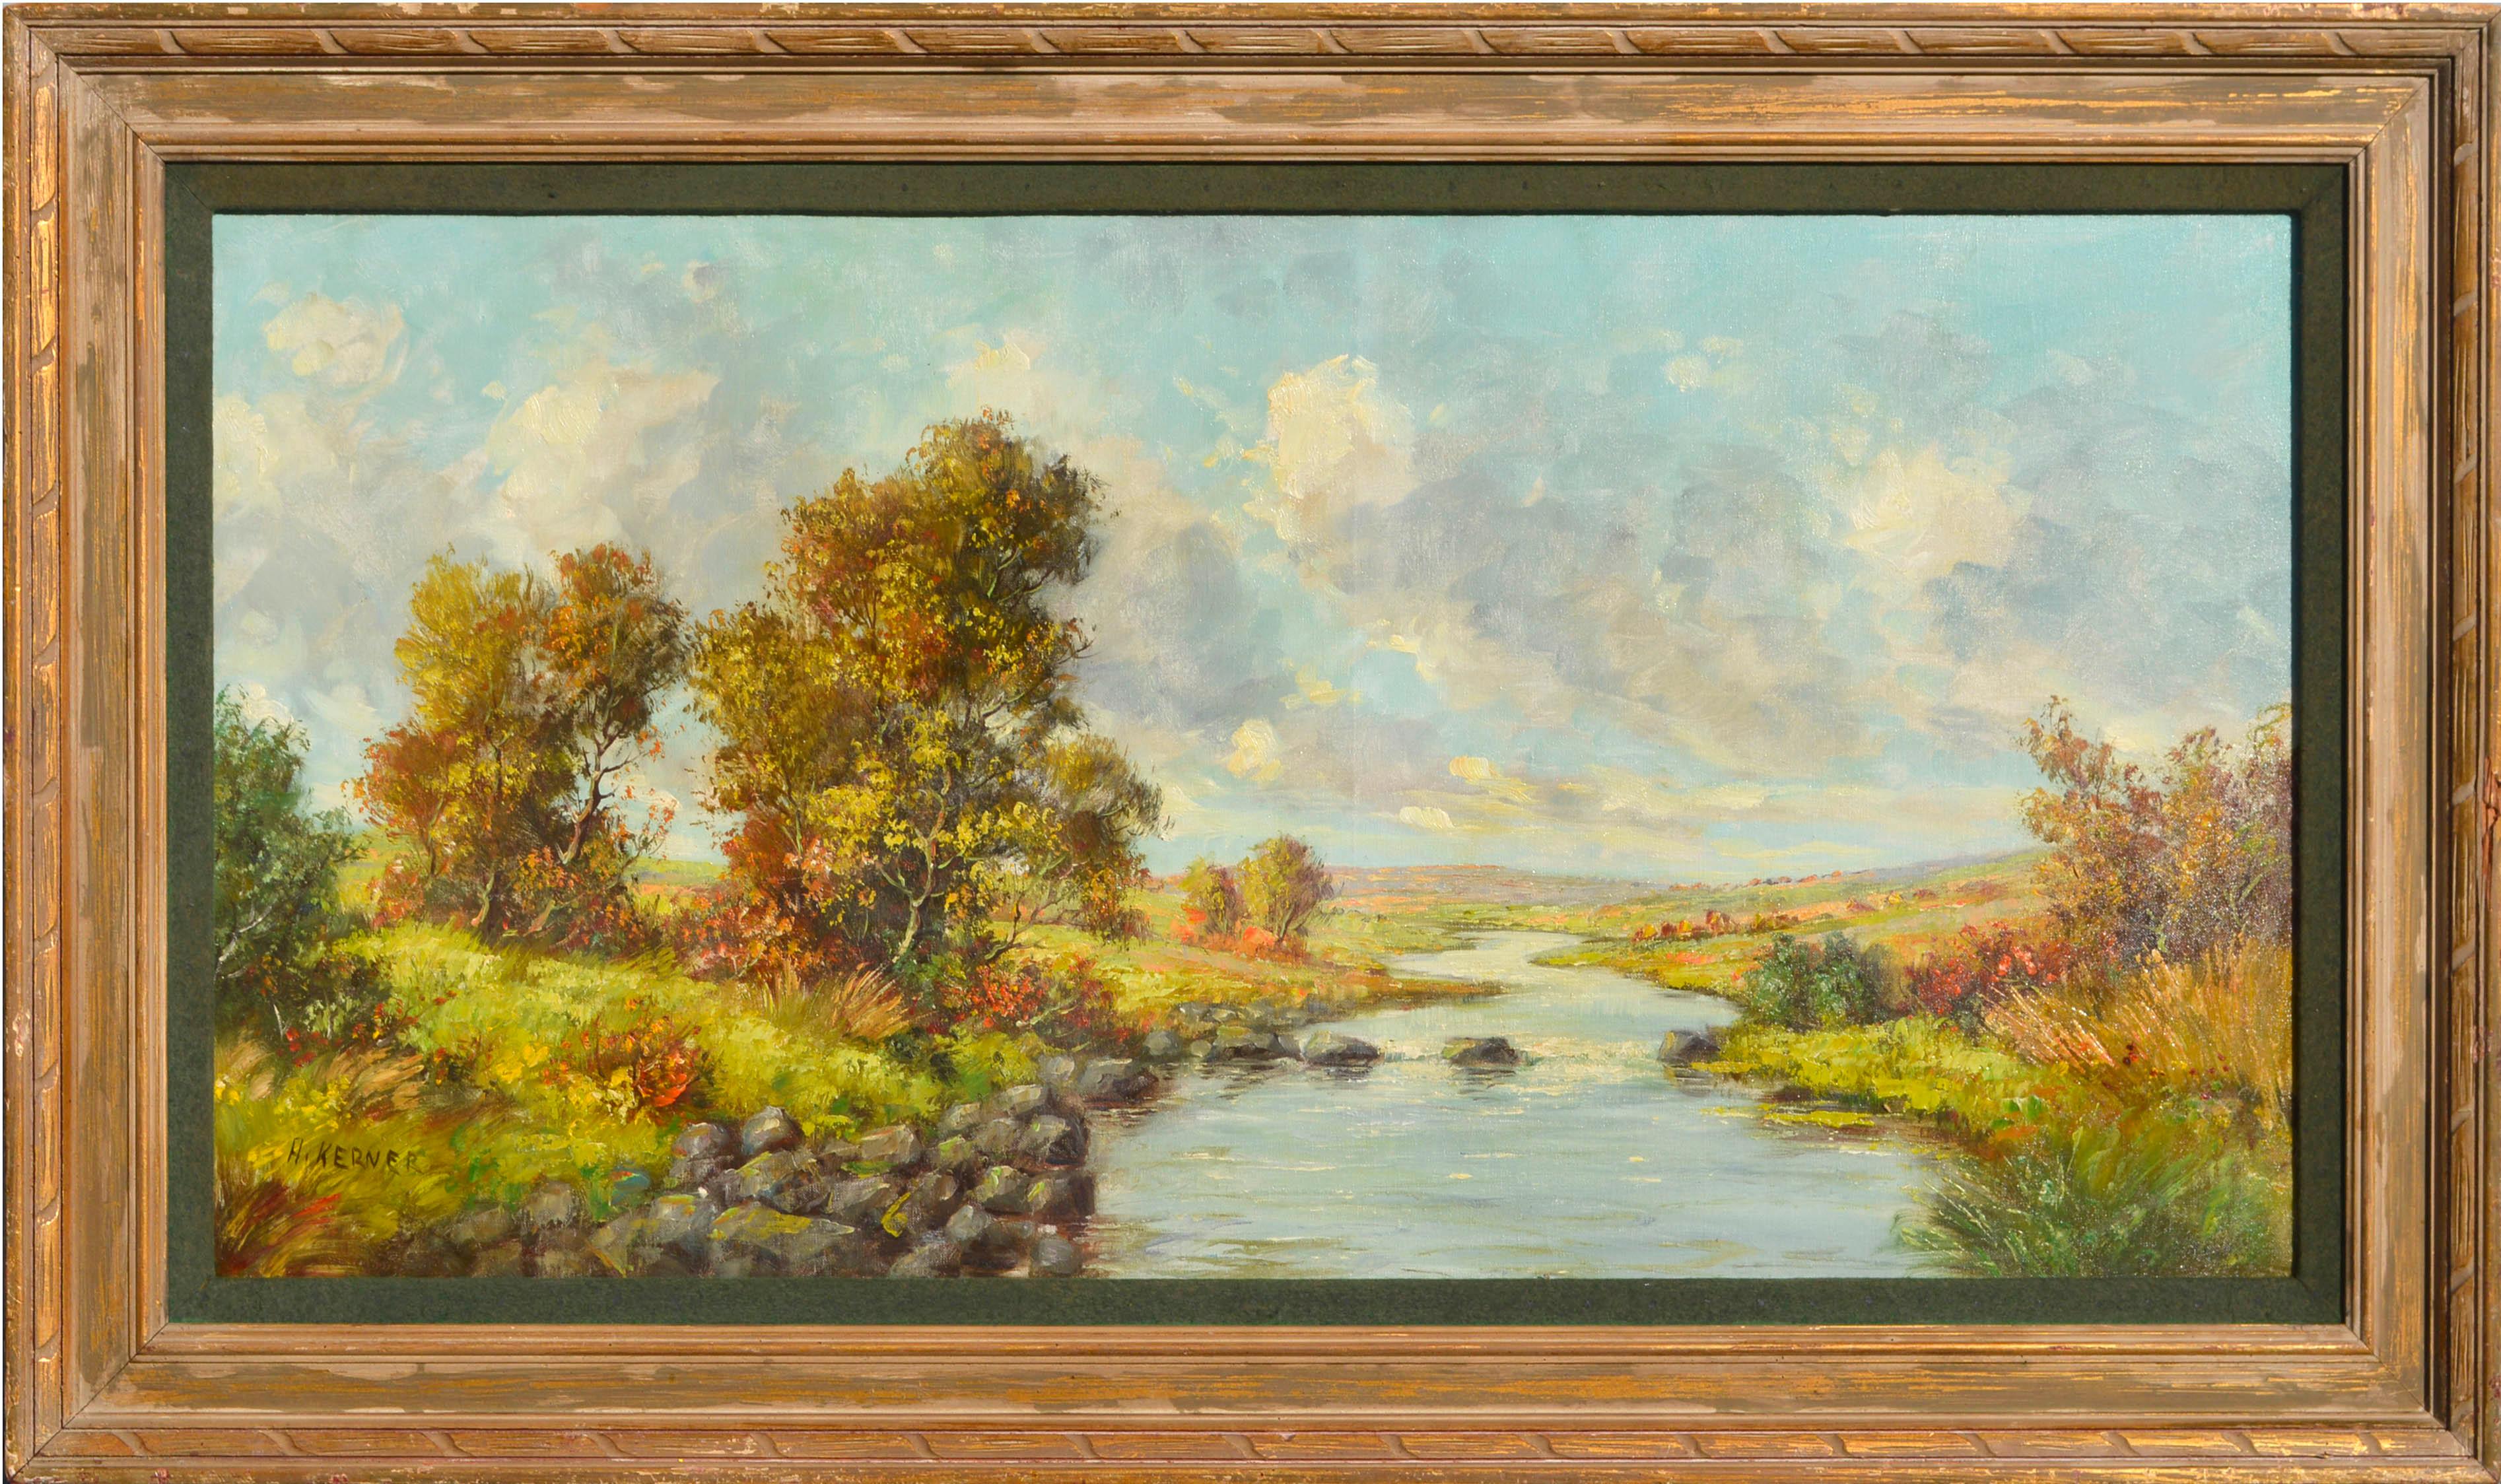 Hans Kerner Landscape Painting - Midcentury Creek in Autumn Landscape